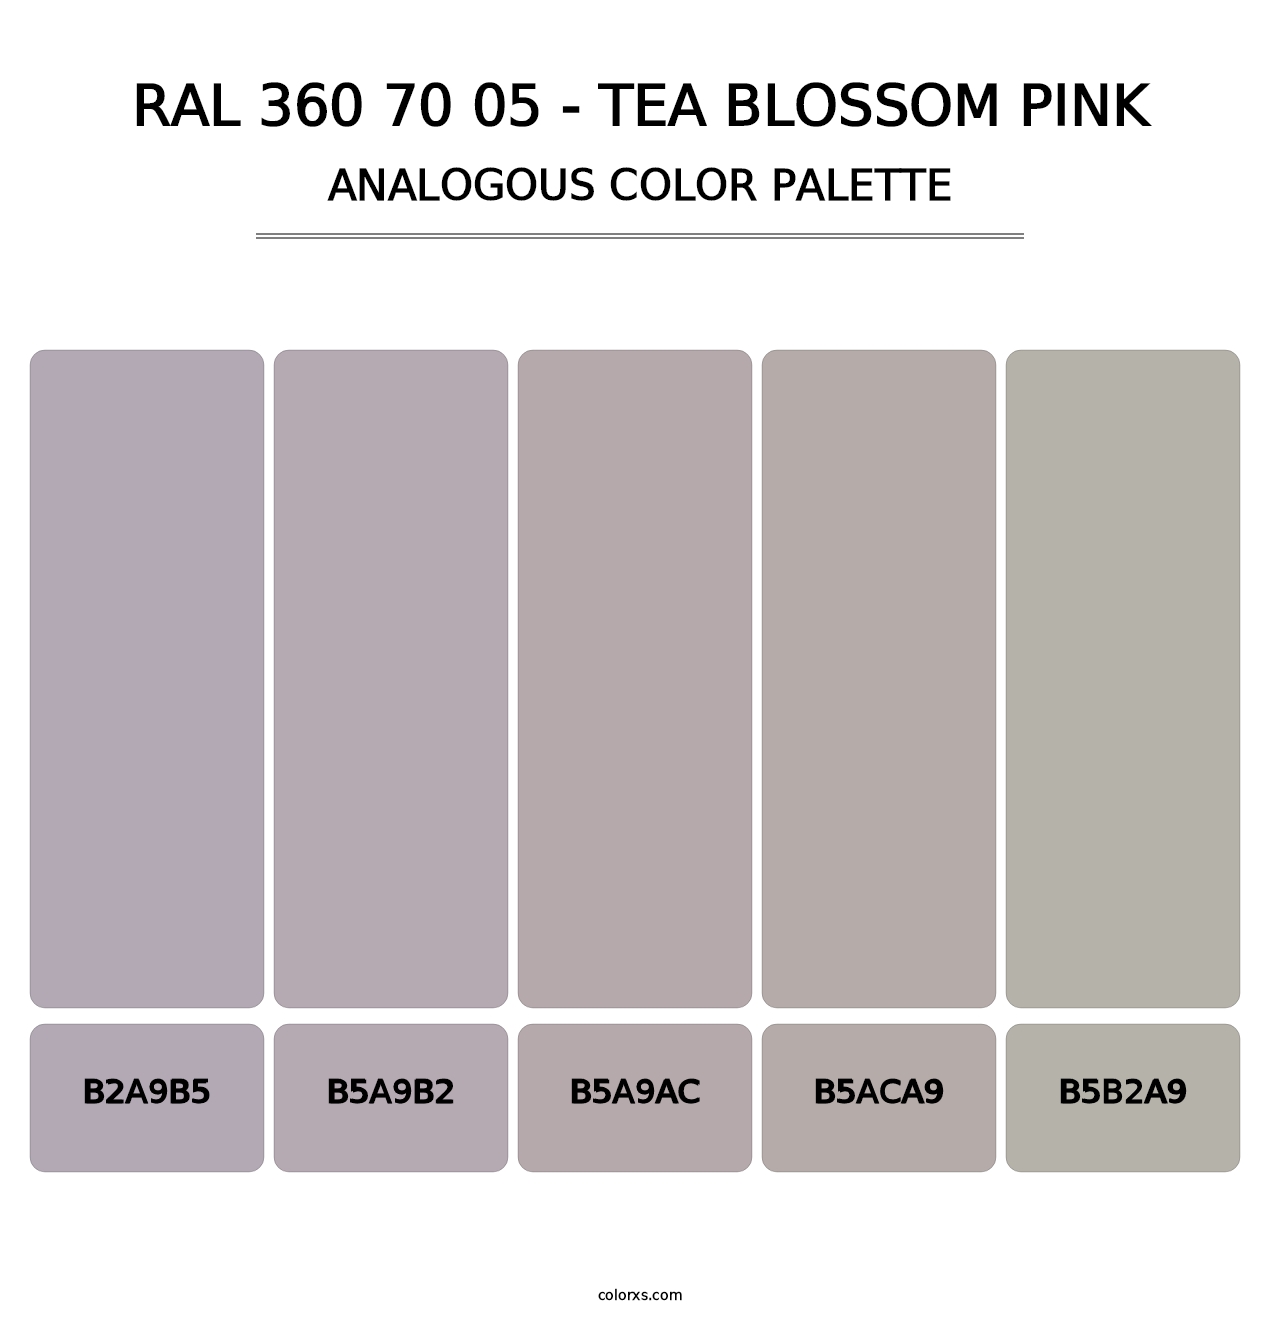 RAL 360 70 05 - Tea Blossom Pink - Analogous Color Palette